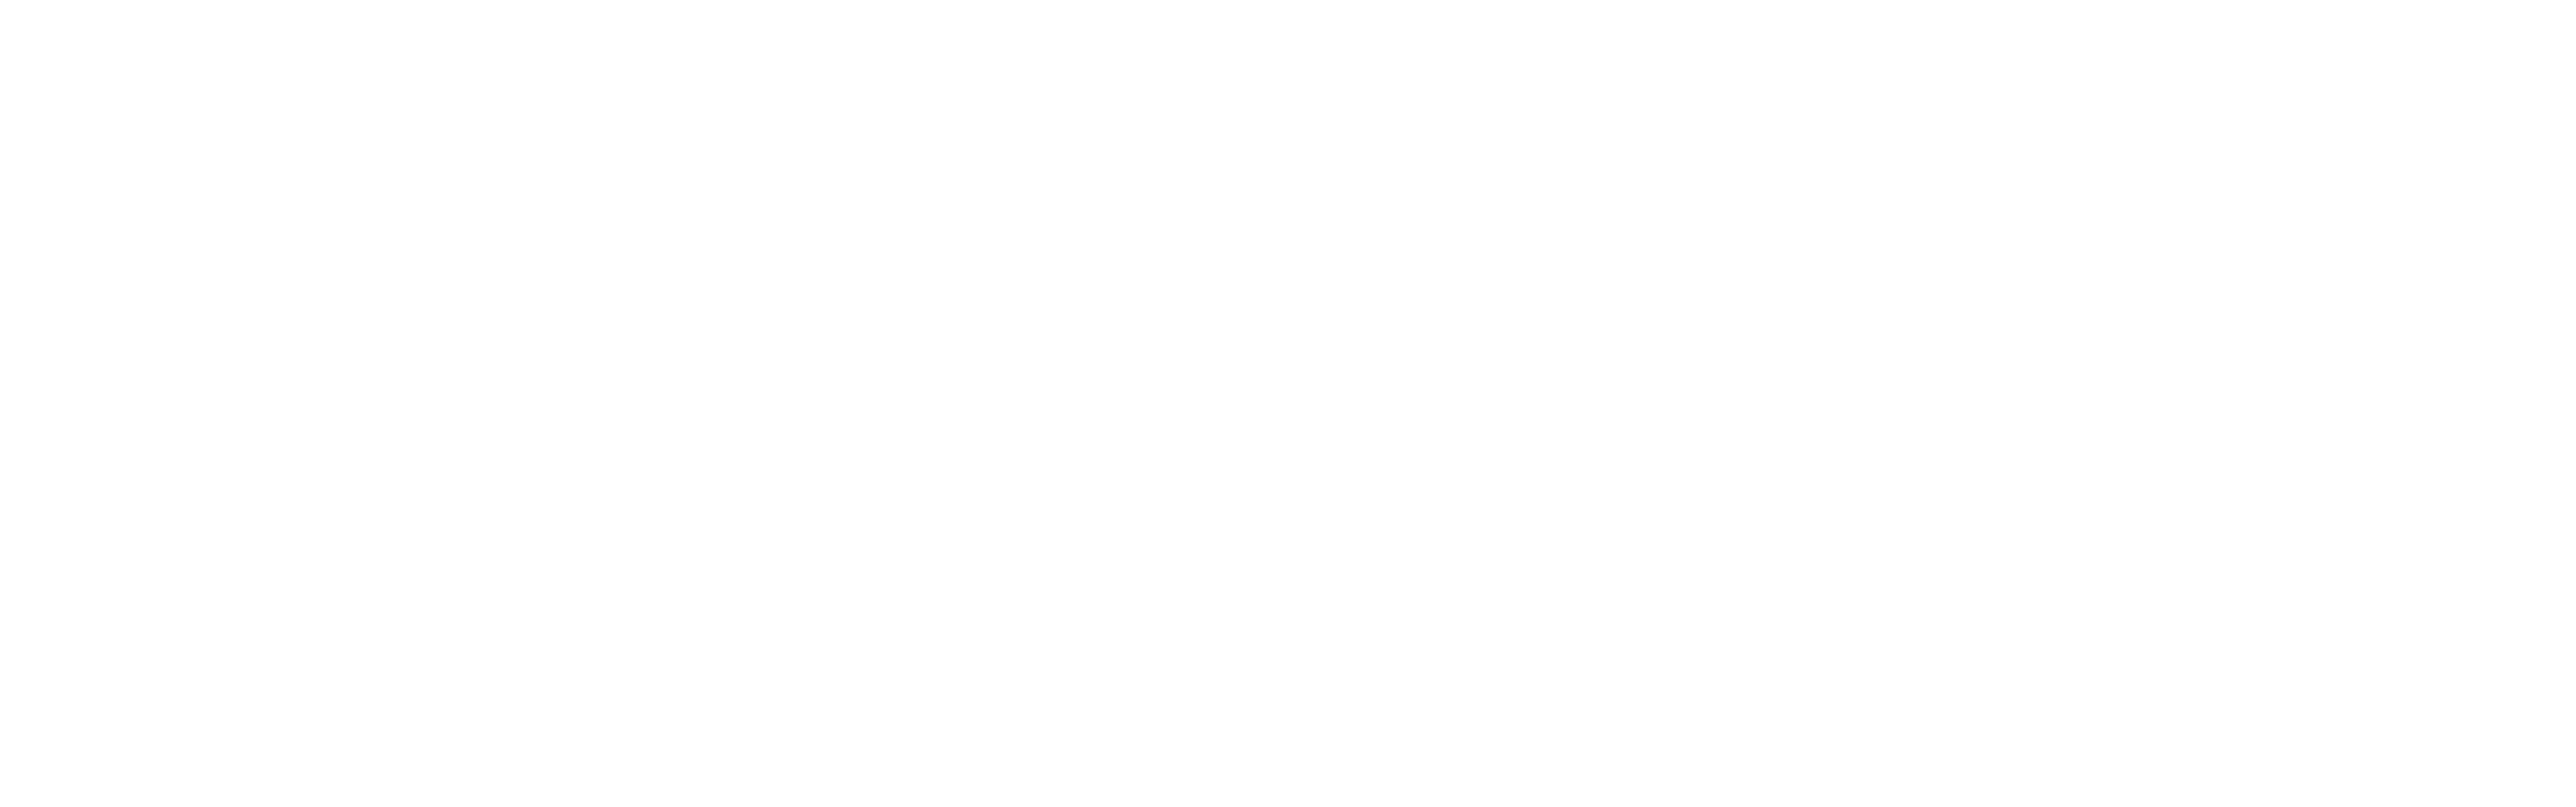 axisvm_secondary_logo_inverz_RGB